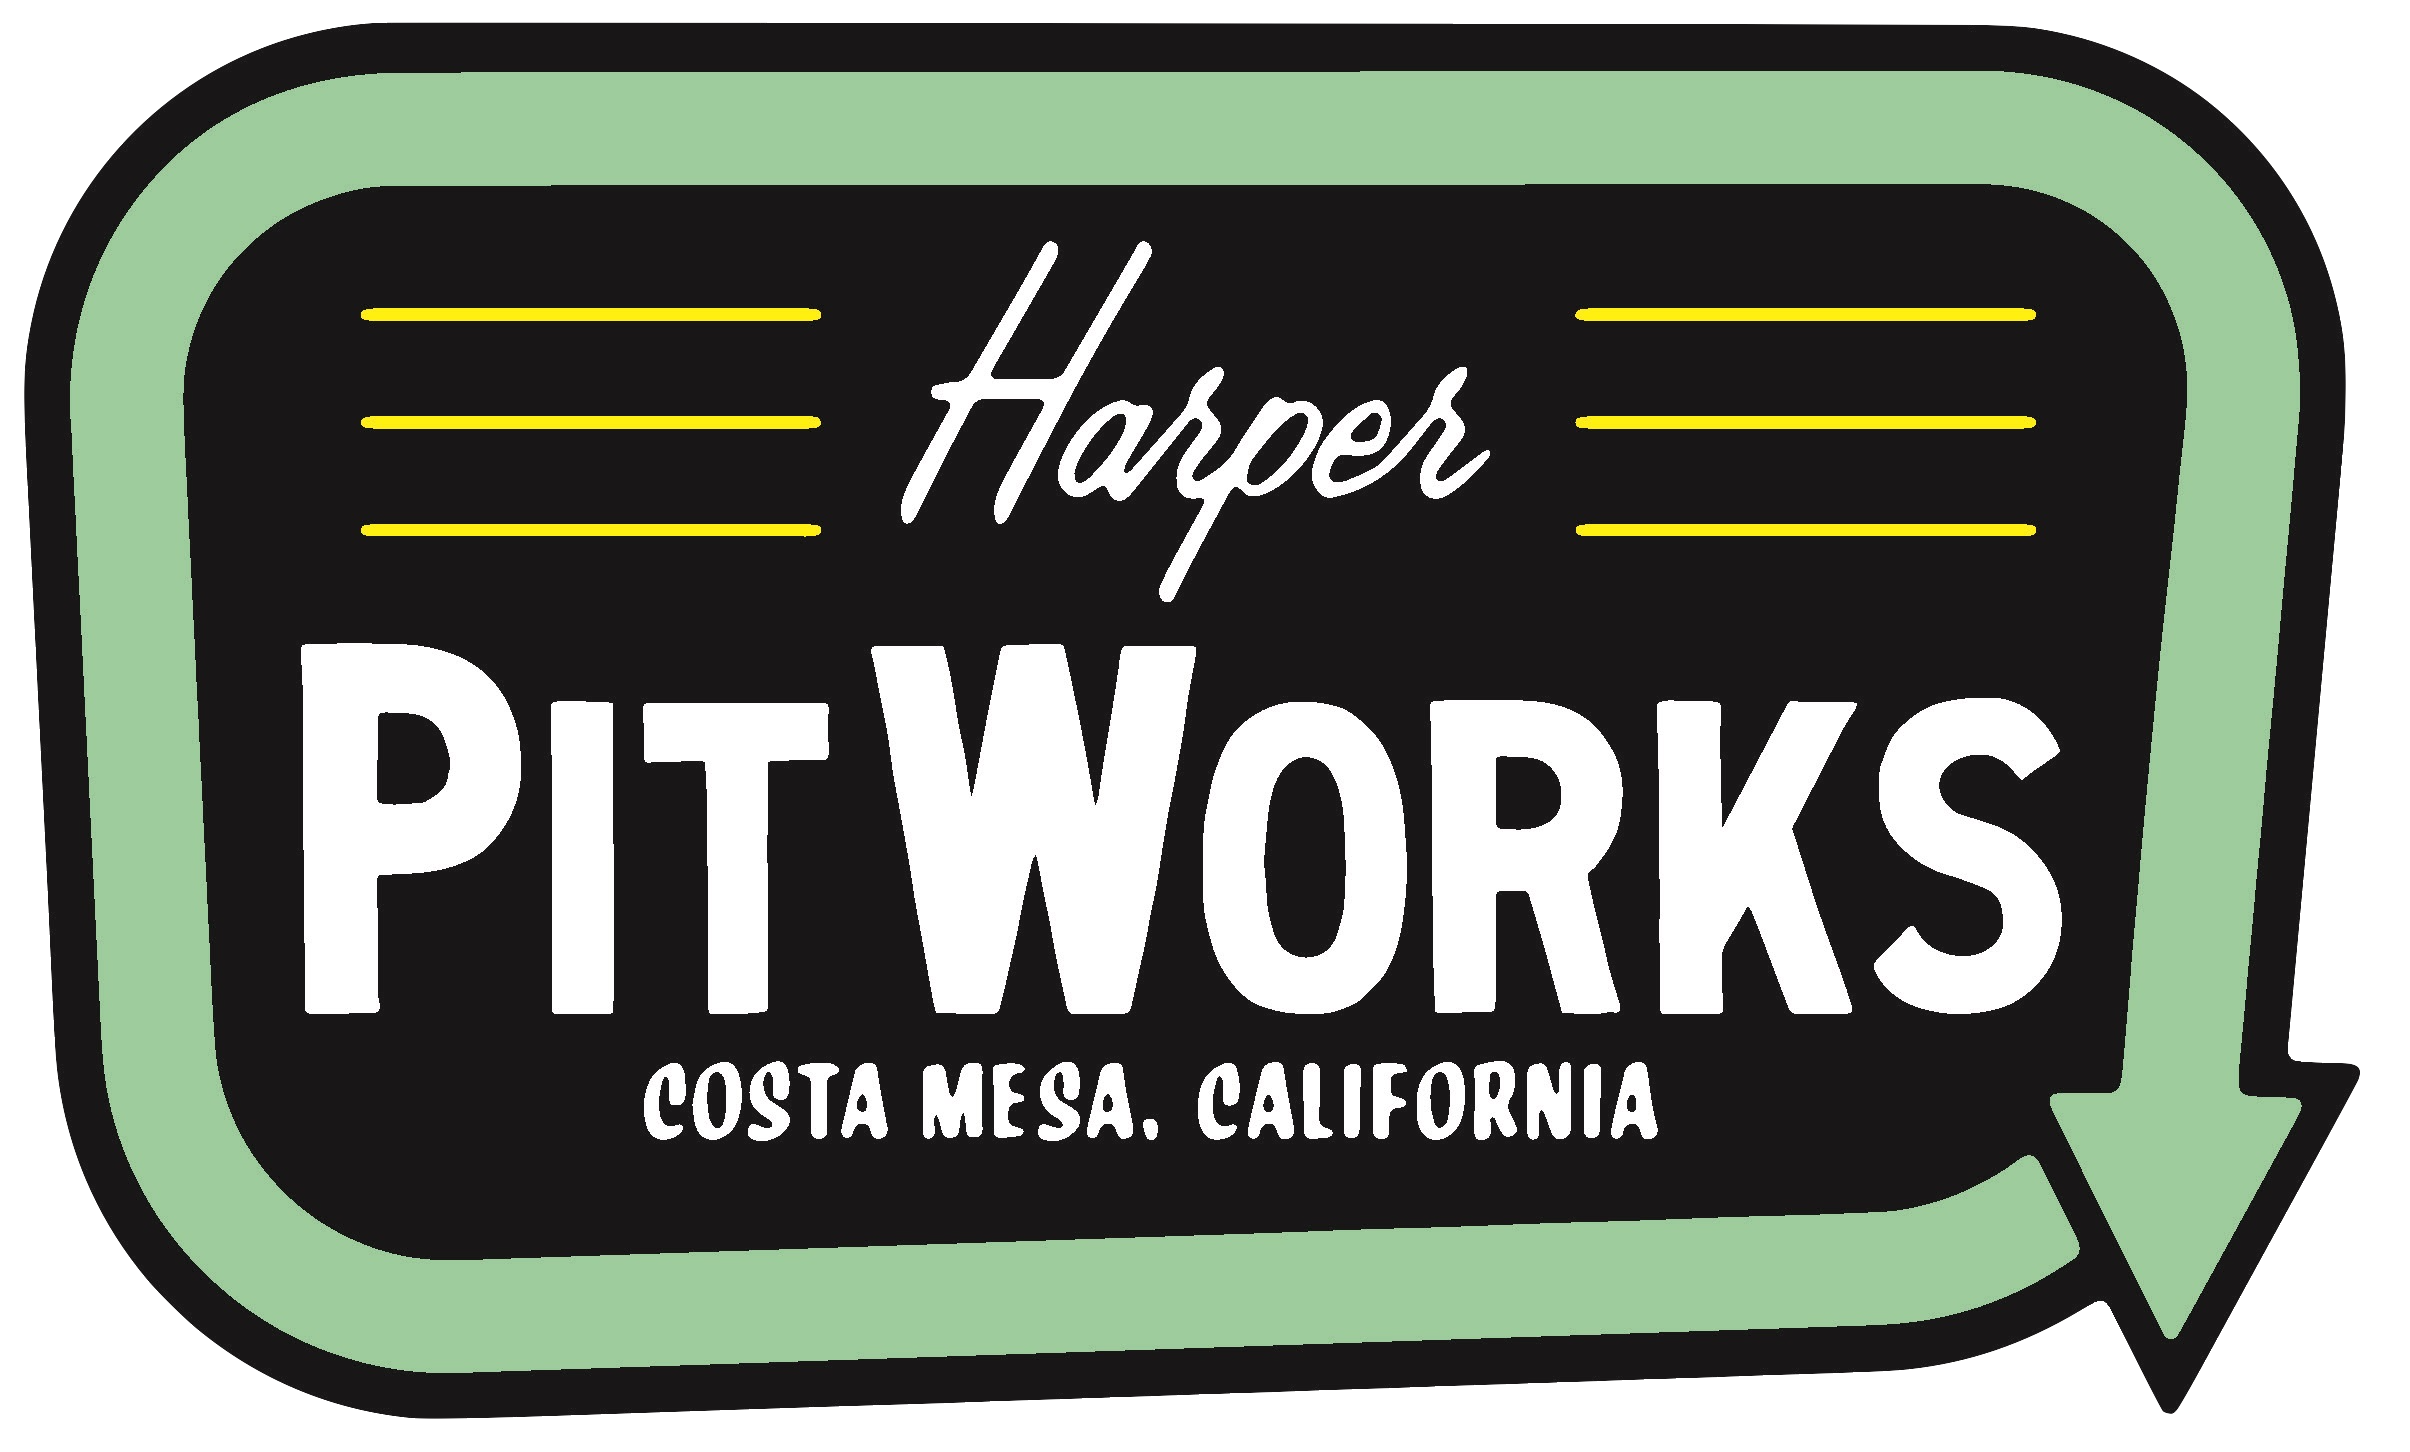 Harper PitWorks